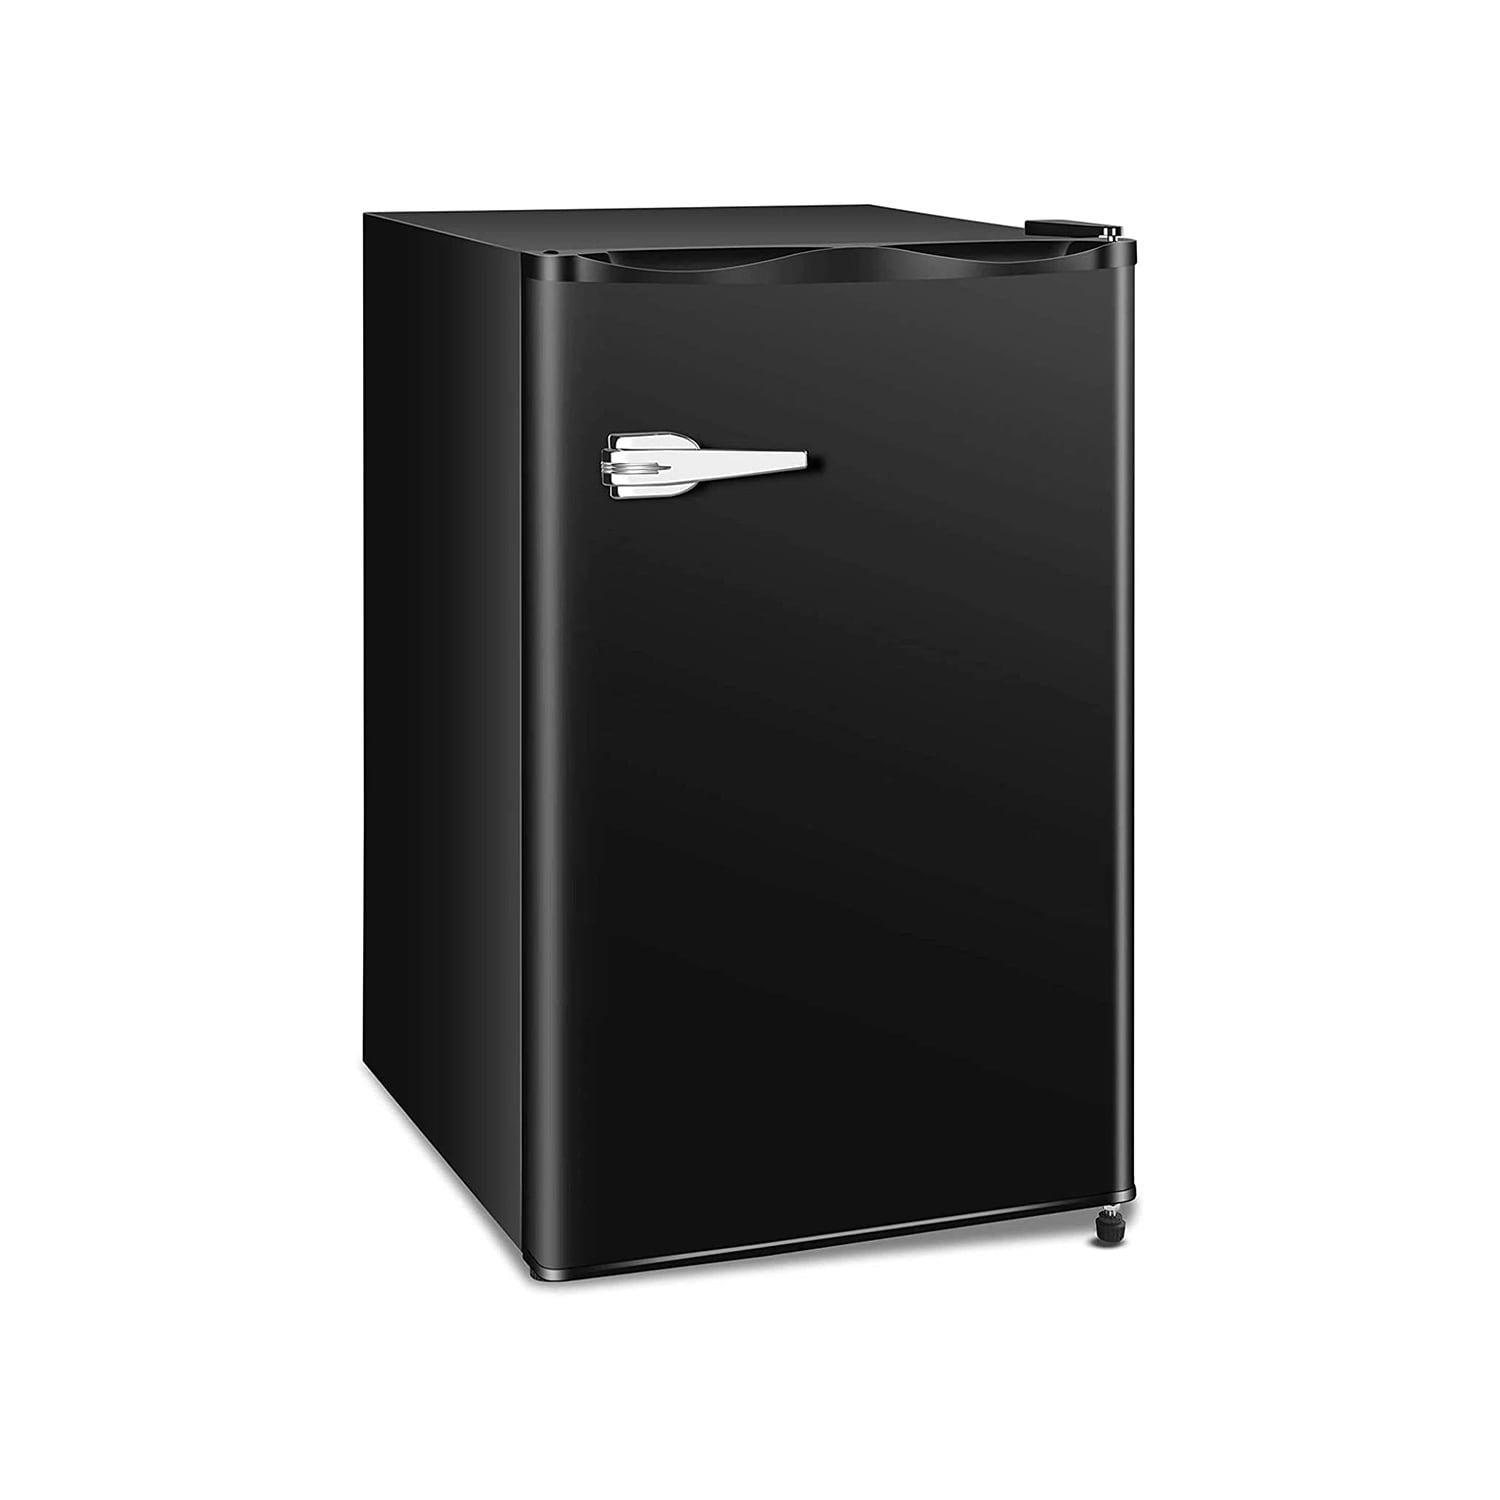 R.W.FLAME Upright Compact Freezer 2.3 Cu.ft, Freestanding Mini